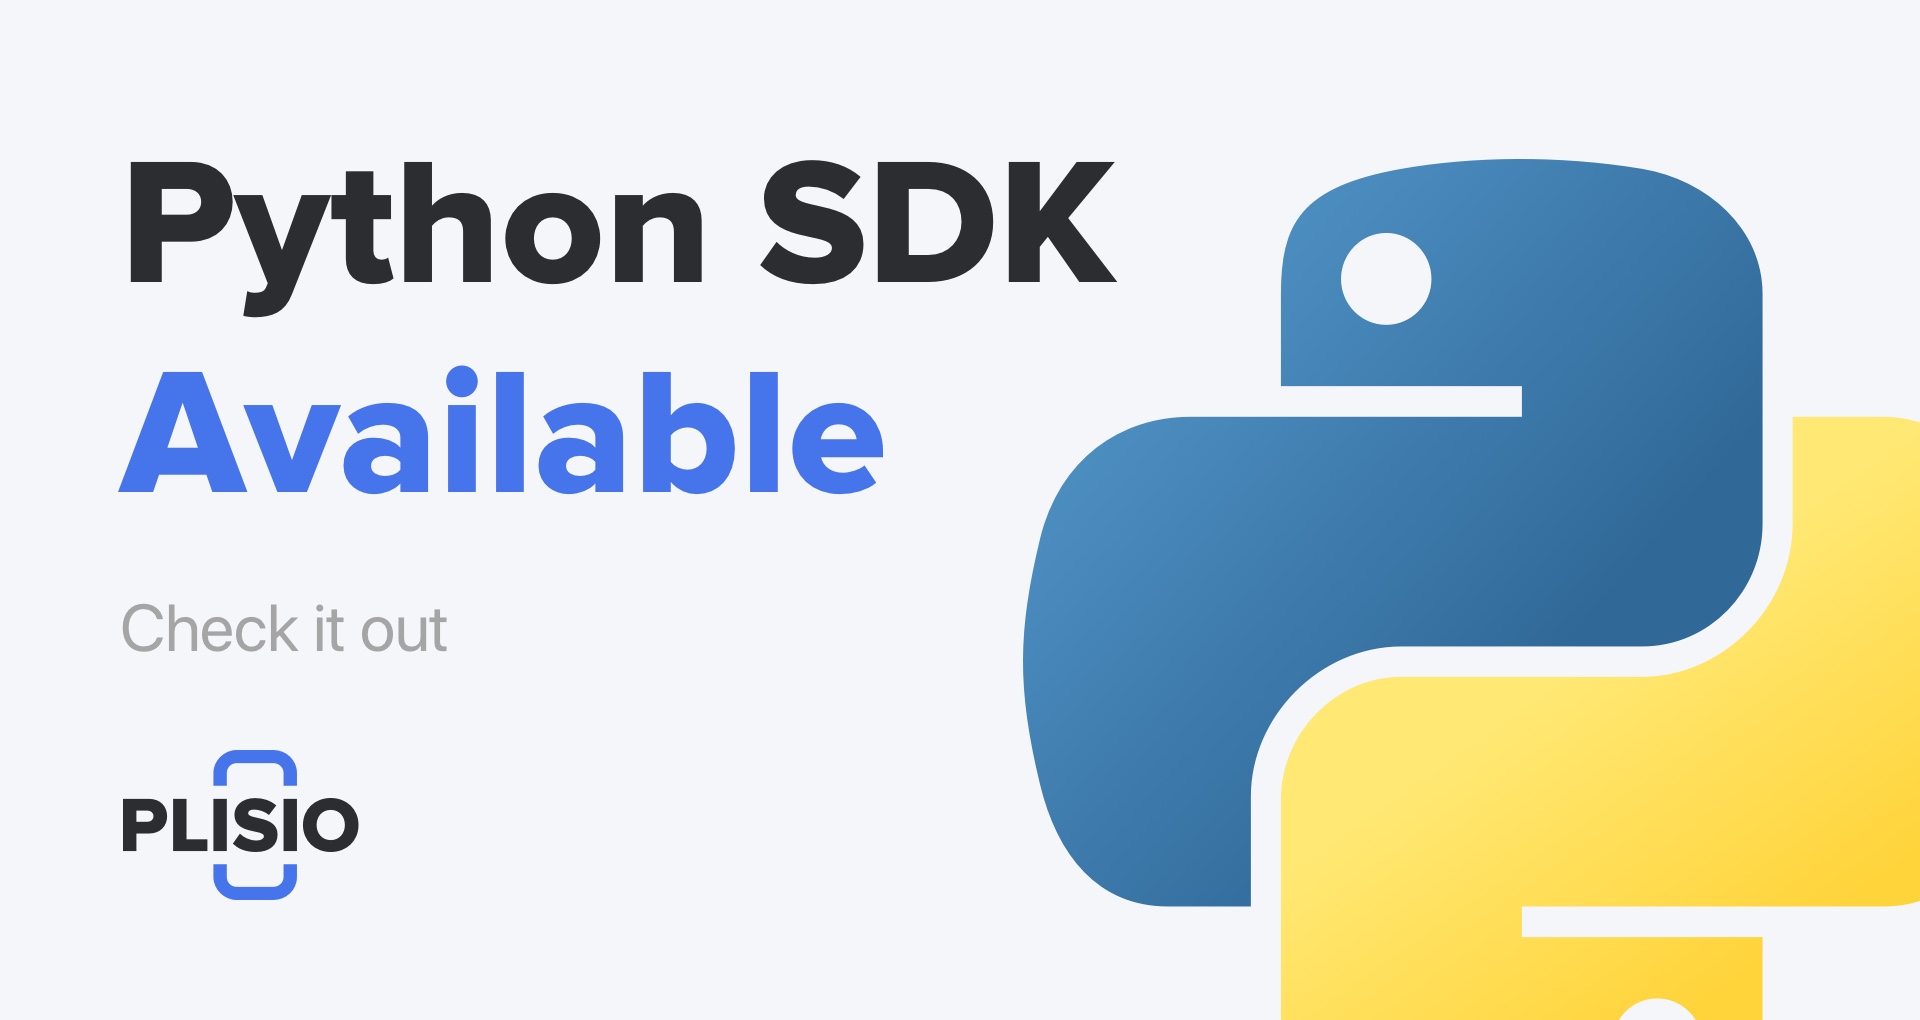 Python SDK متاح الآن. تحقق من ذلك!